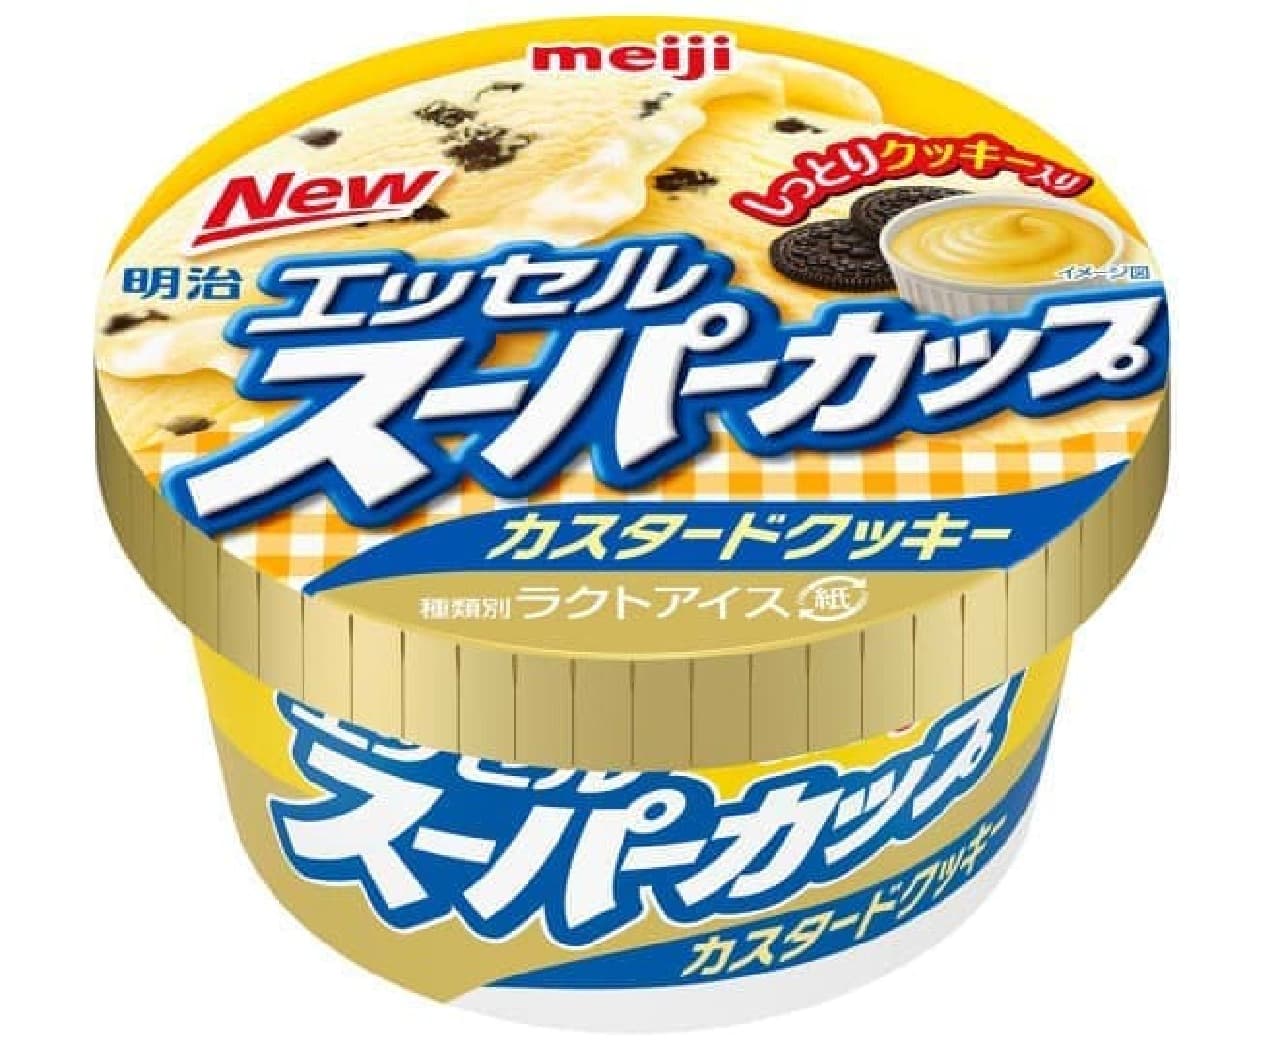 Meiji Essel Super Cup Custard Cookies